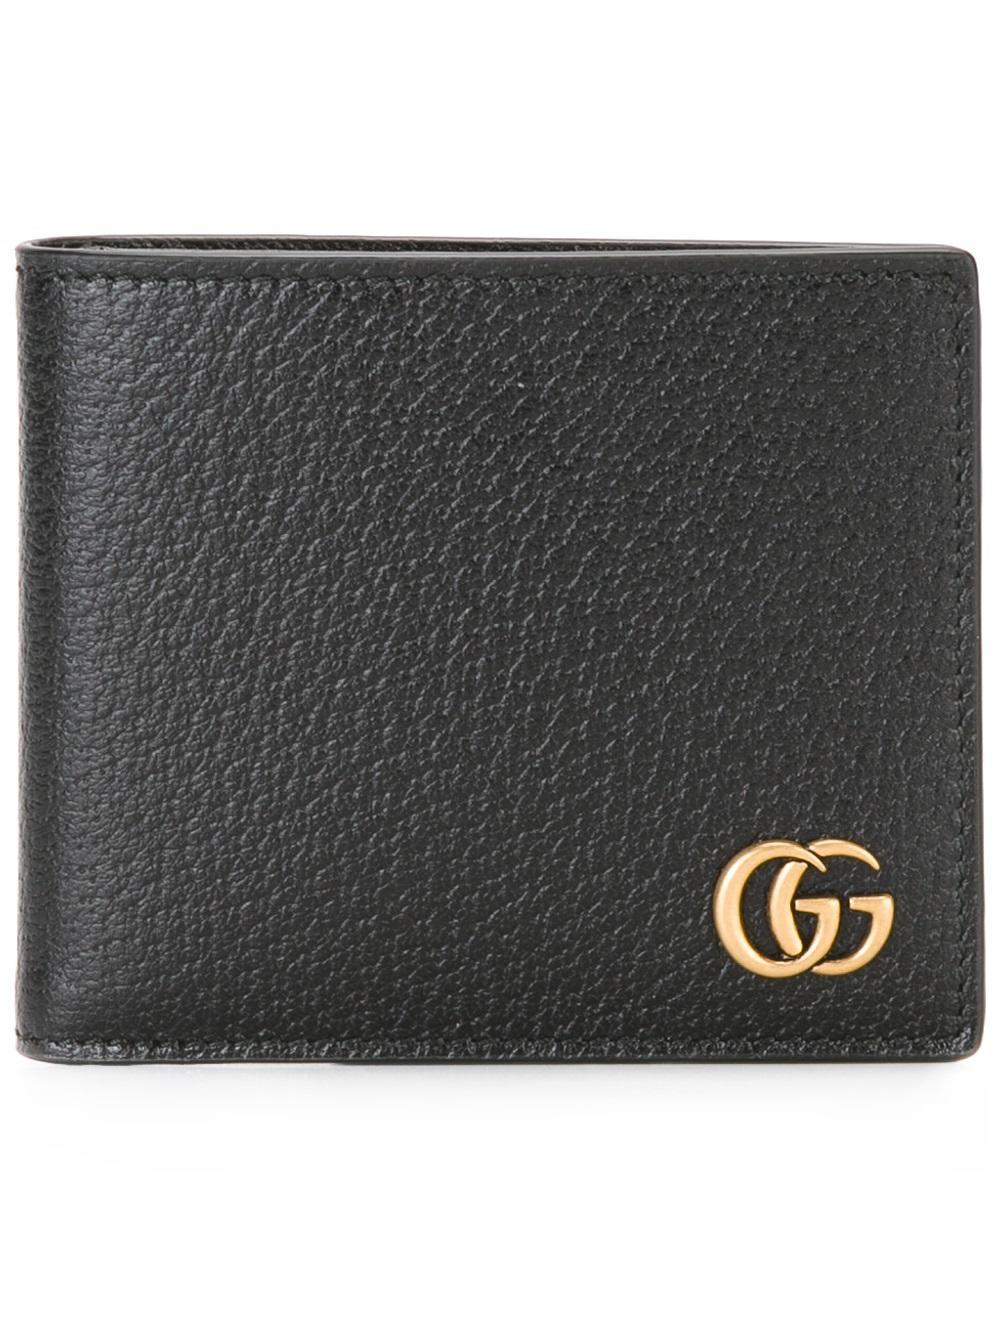 Lyst - Gucci Gg Marmont Billfold Wallet in Black for Men